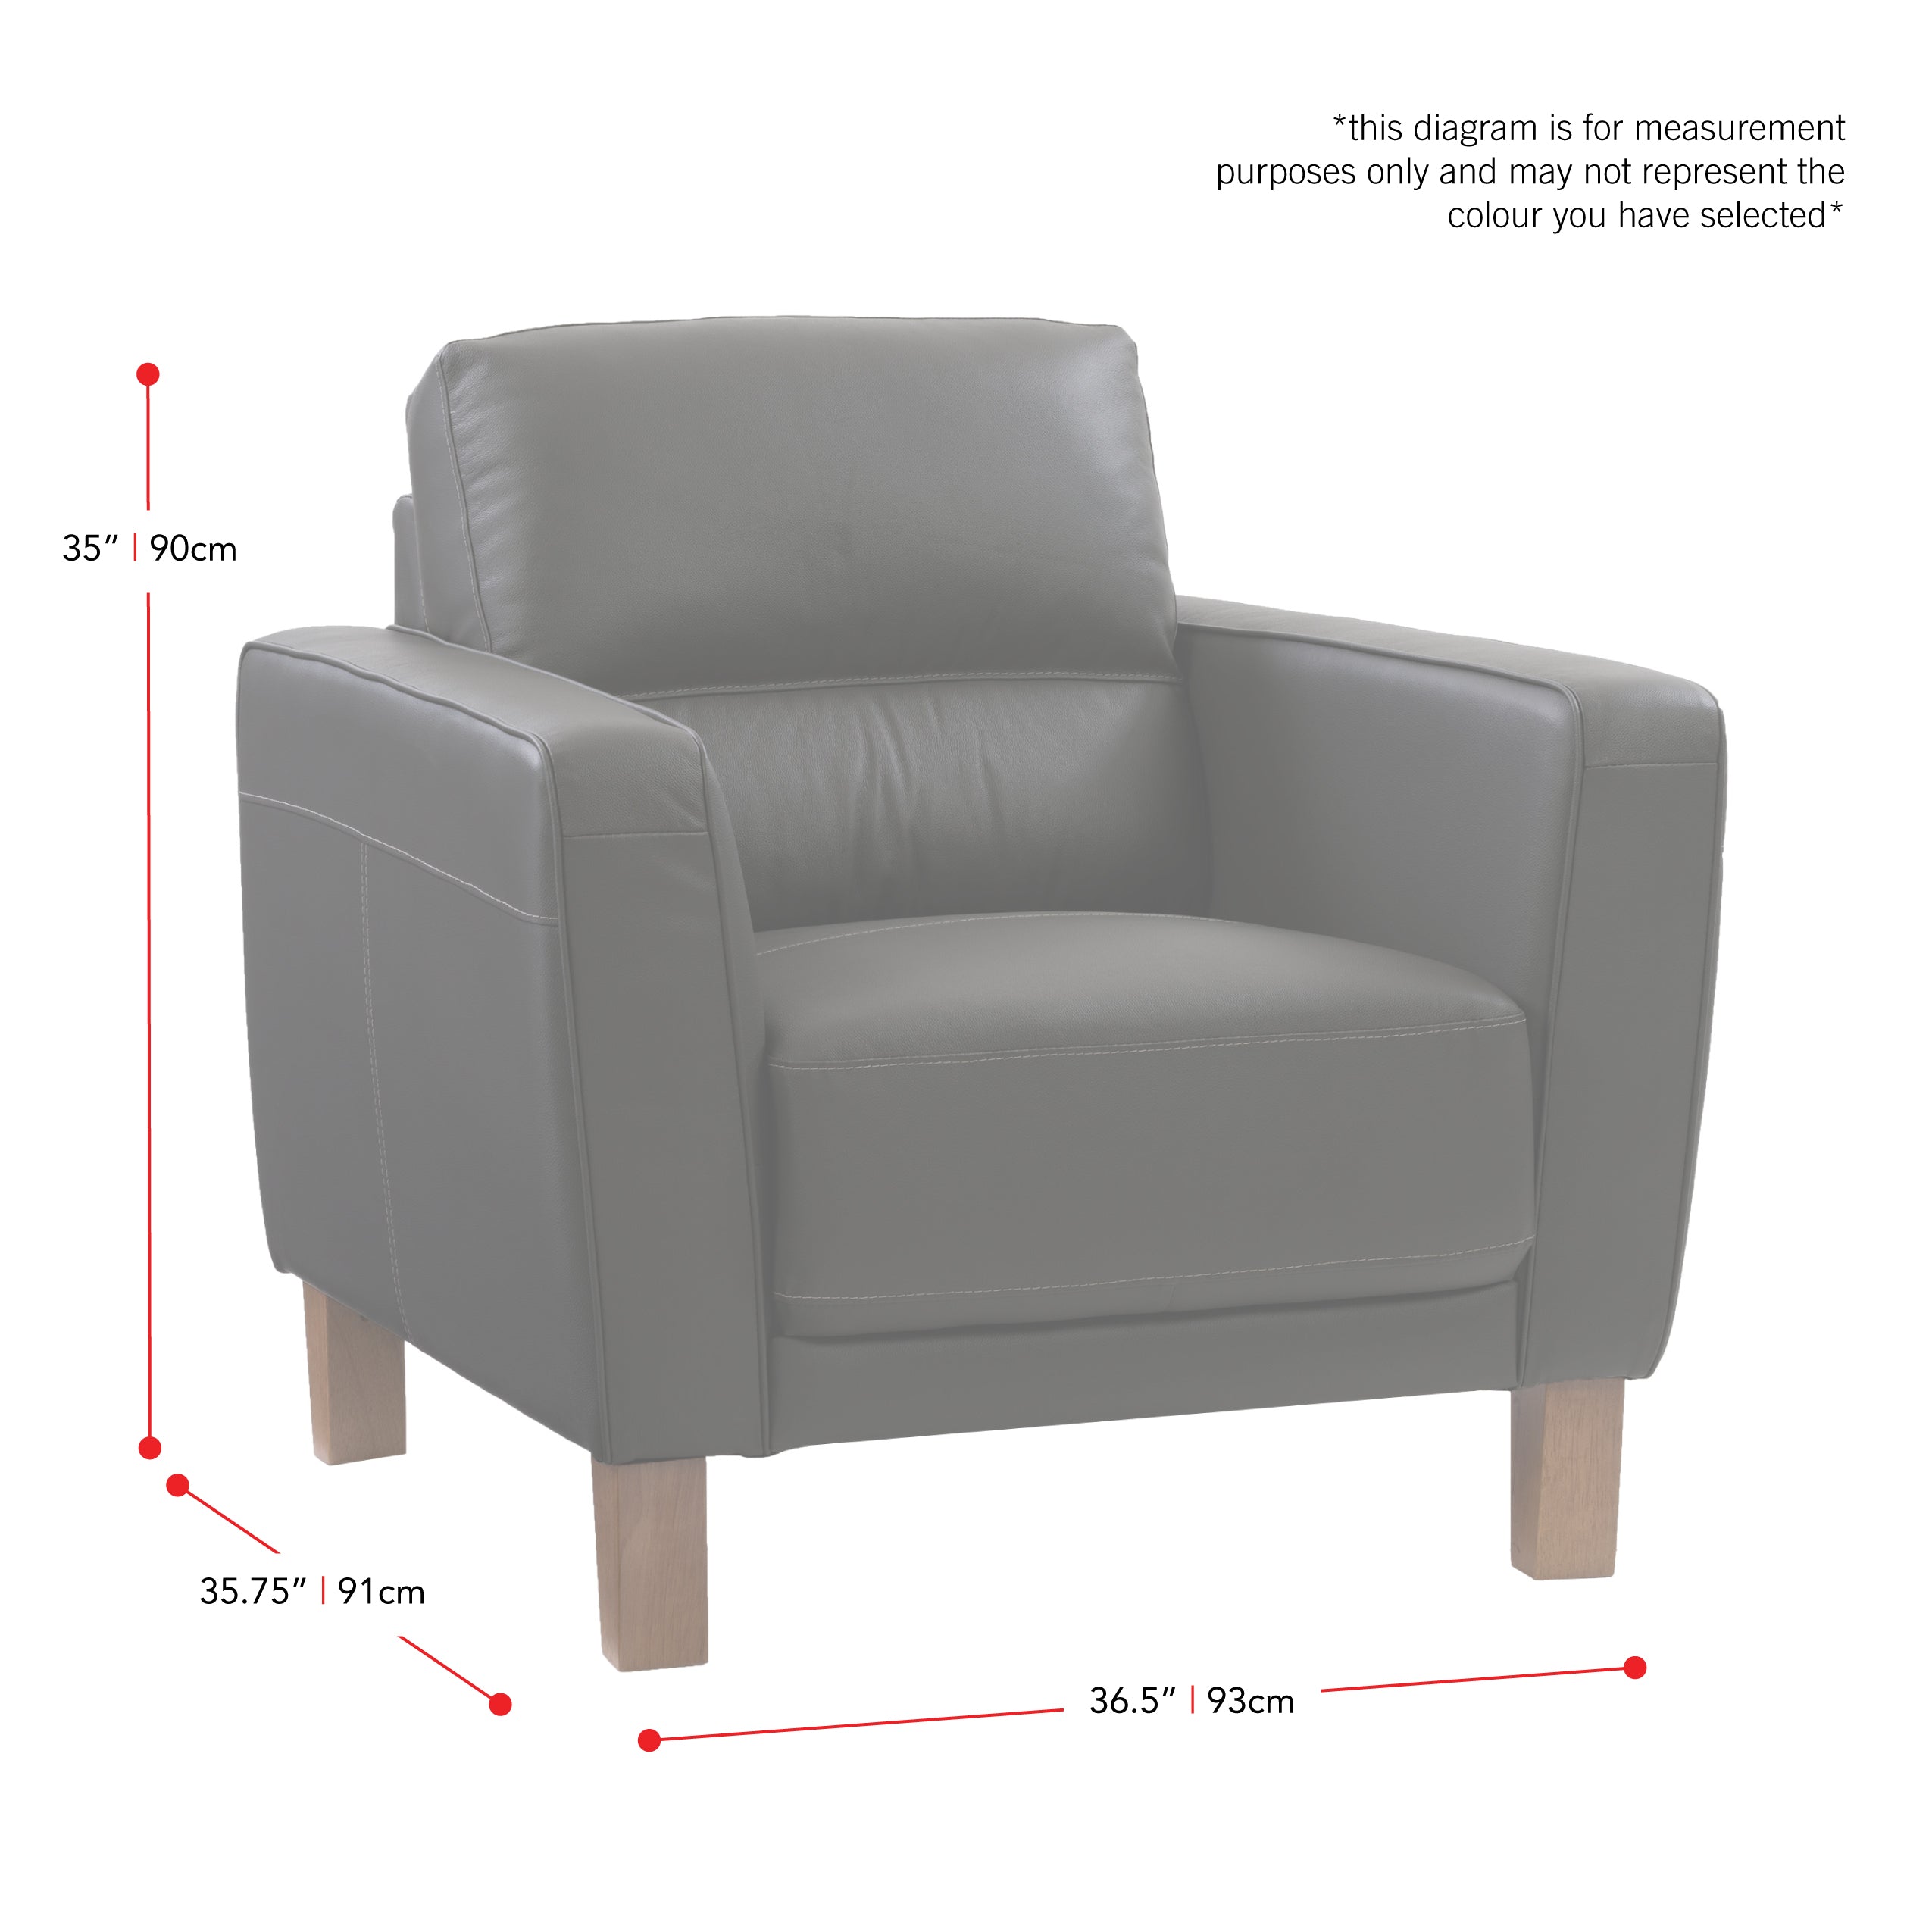 black Leather Accent Chair Savannah Collection measurements diagram by CorLiving#color_black